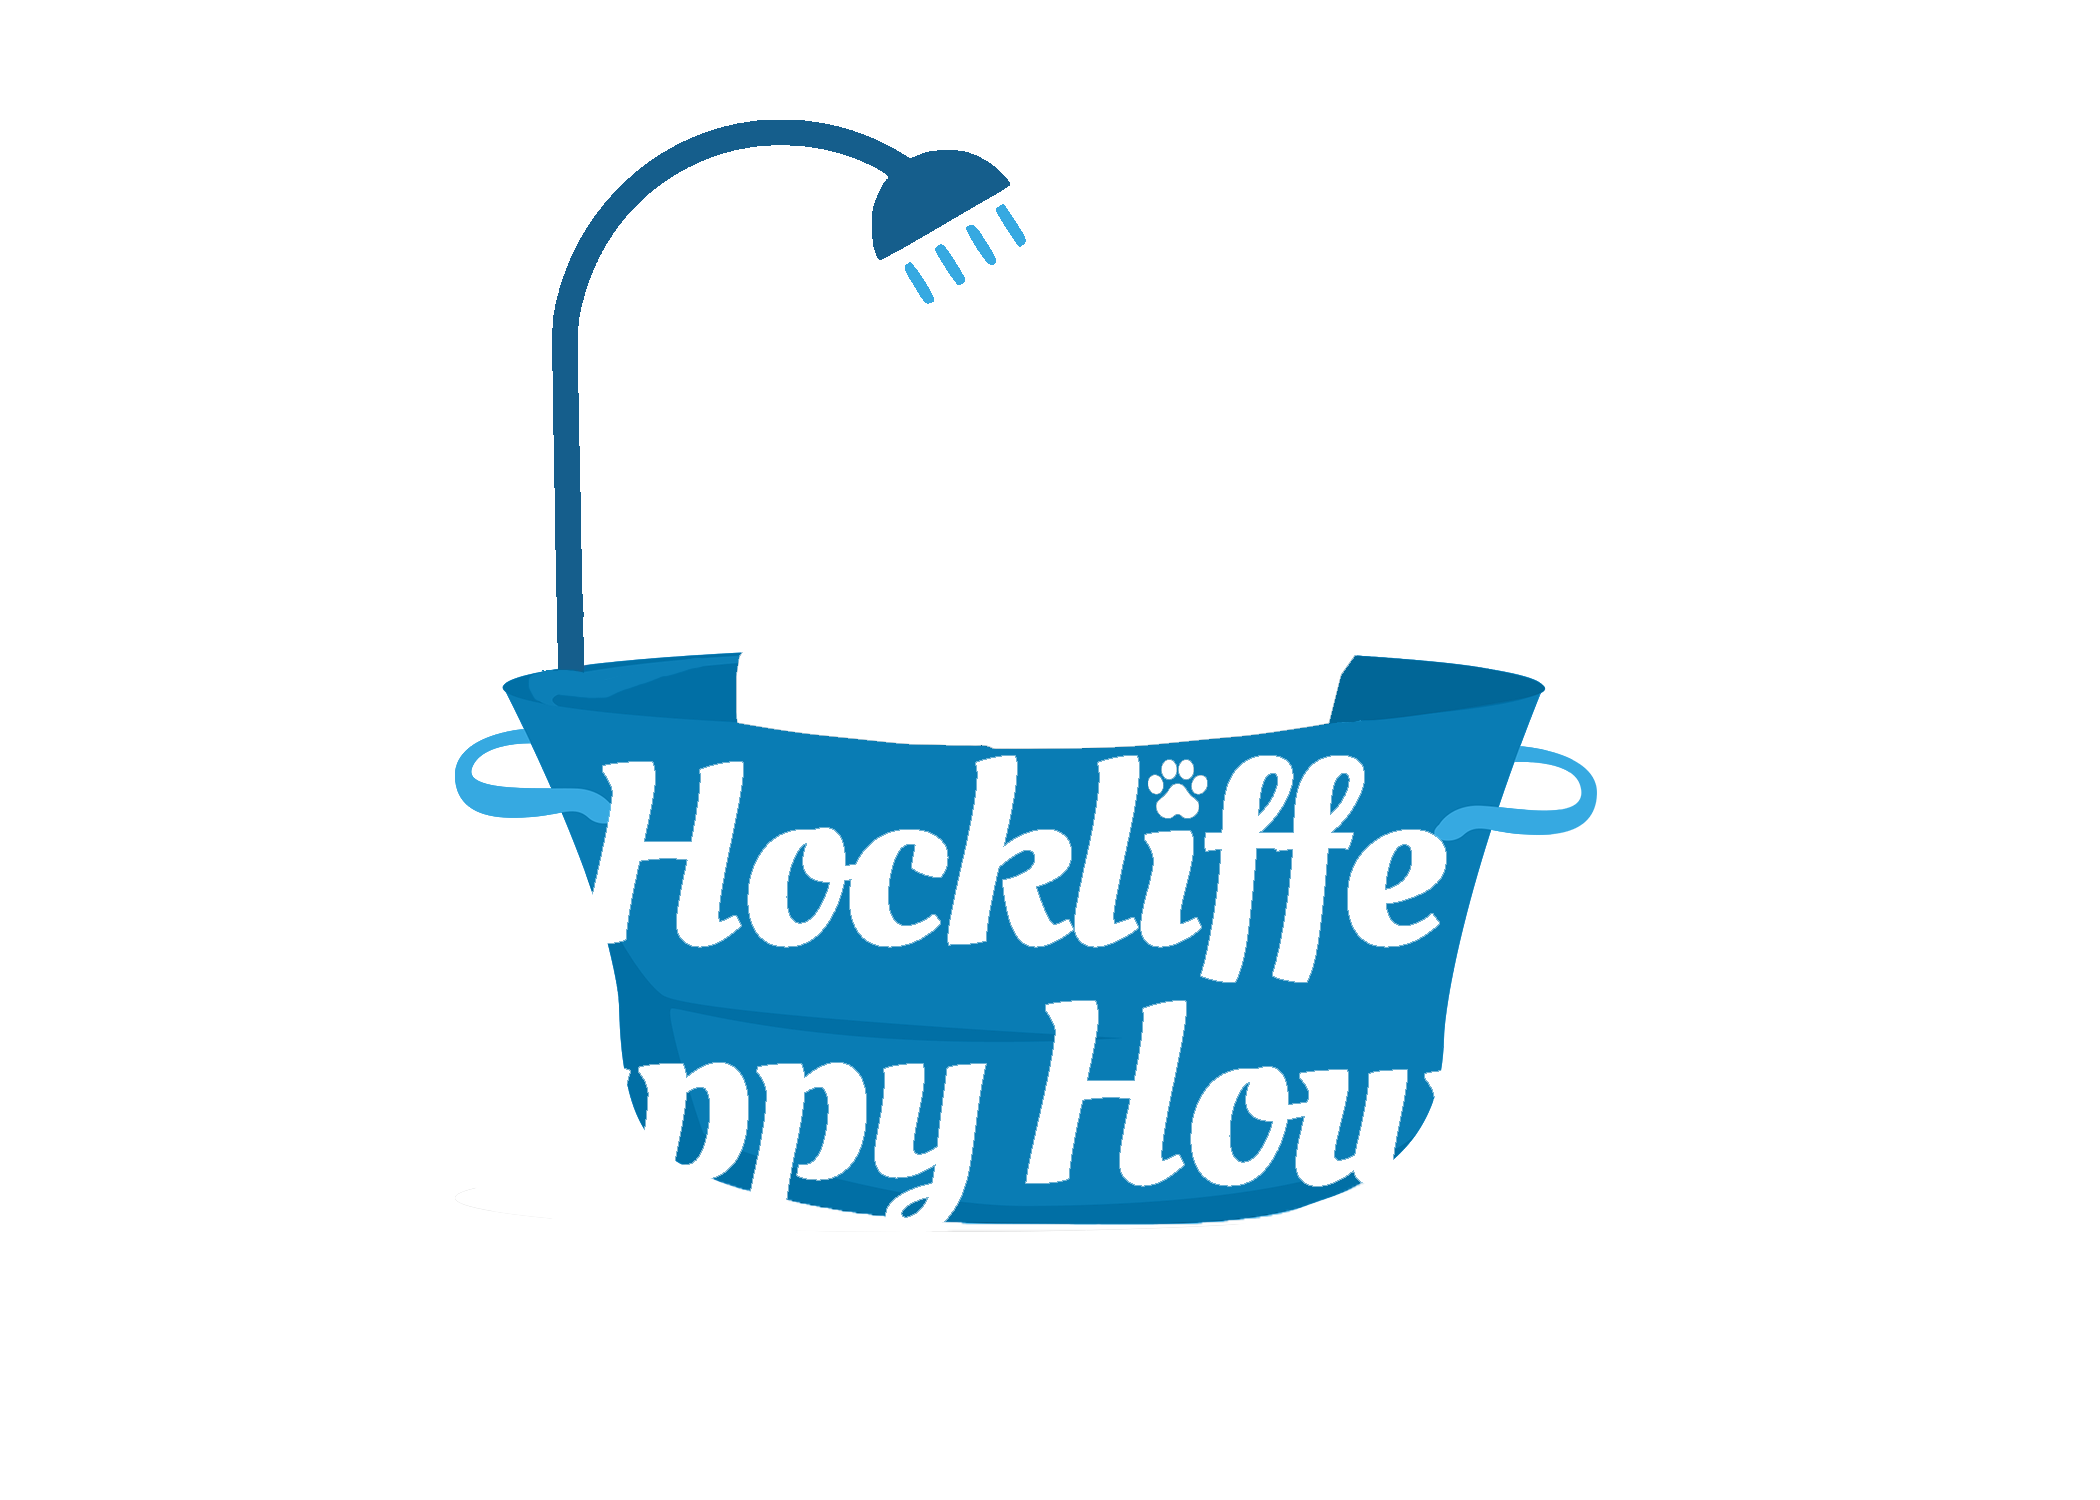 Hockliffe Happy Hounds White